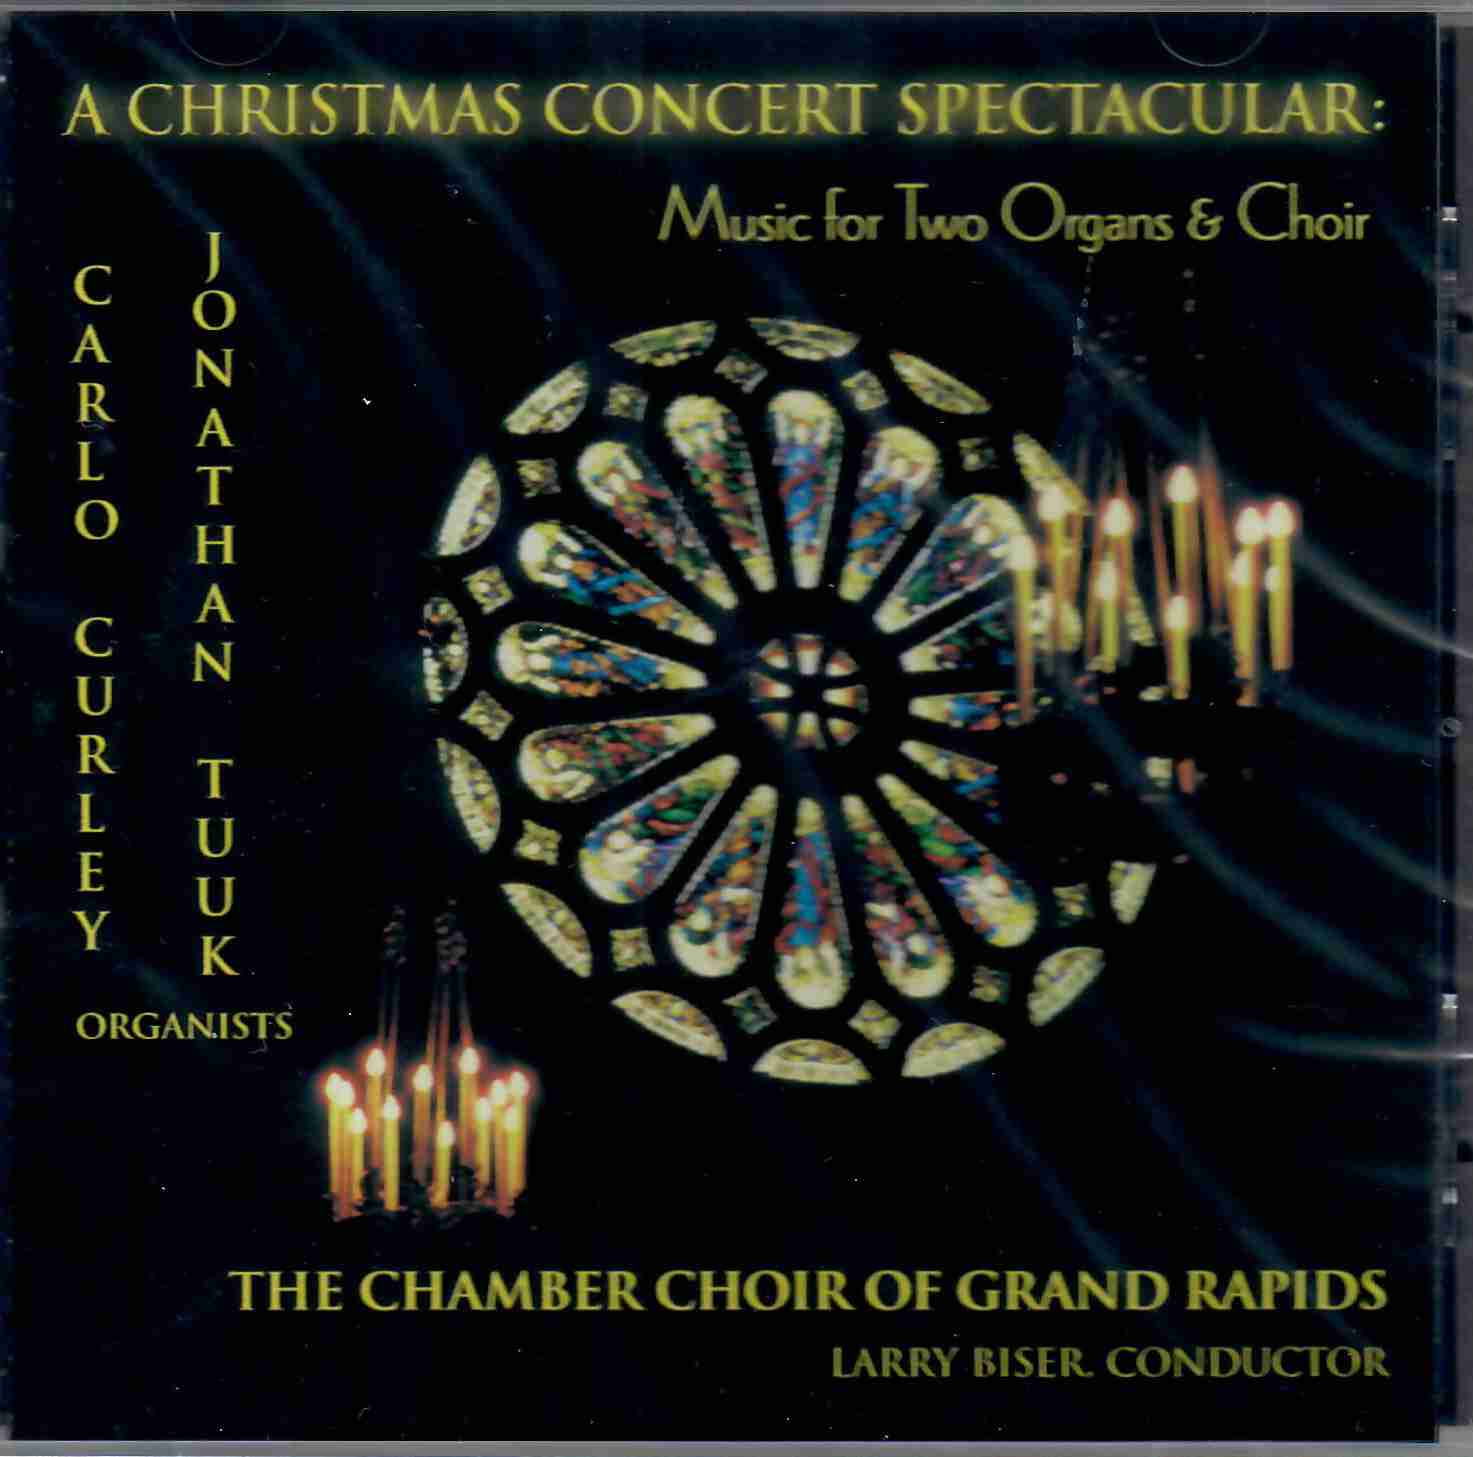 Carlo Curley and Jonathan Tuuk - A Christmas Concert Spectacular